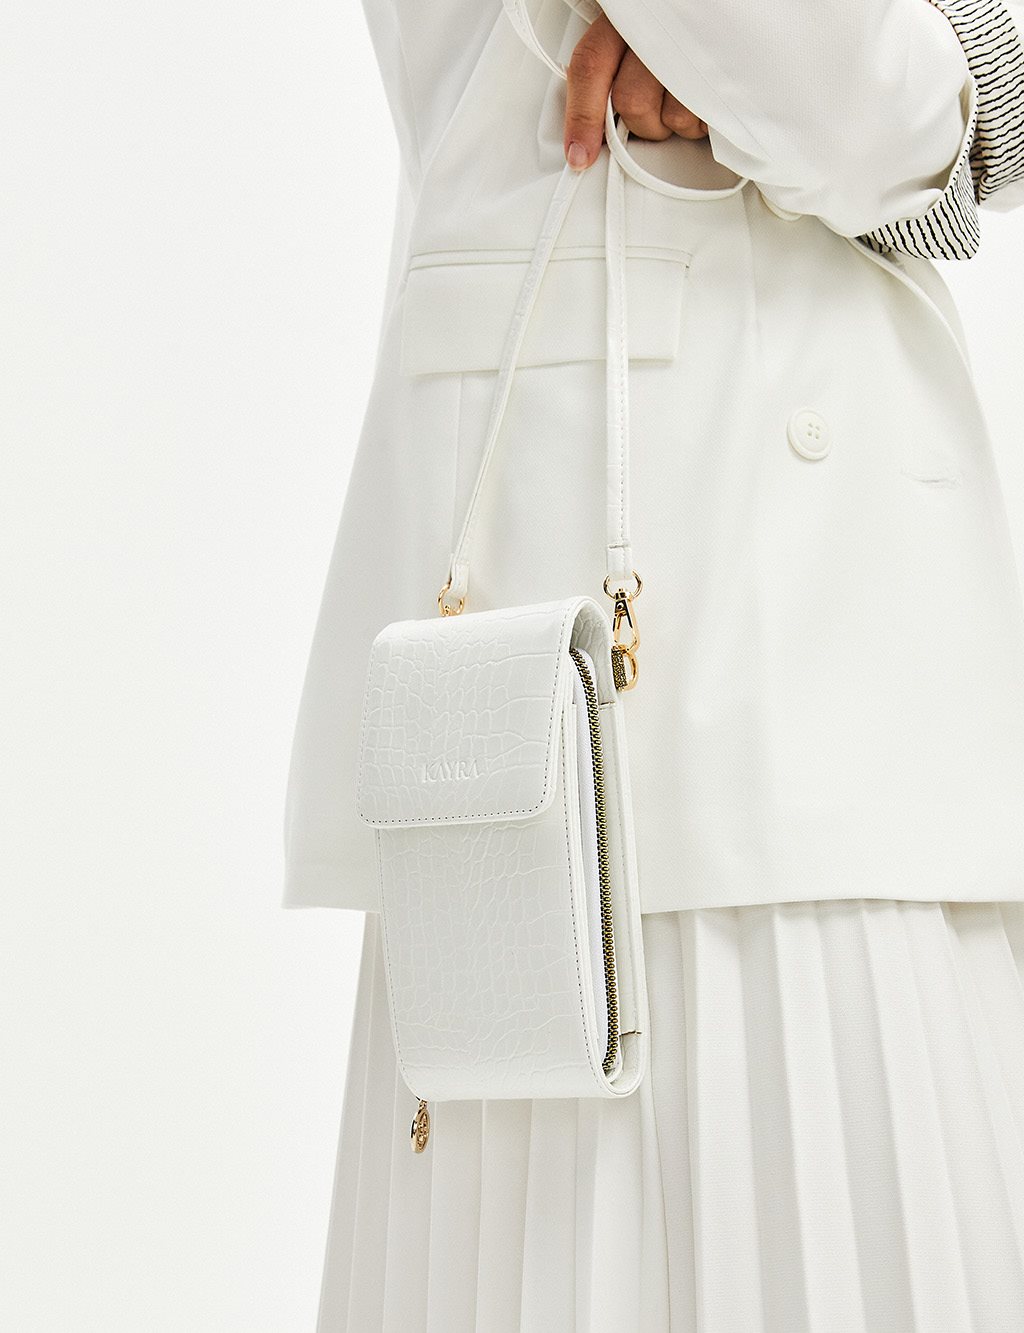 Croco Patterned Multifunctional Bag Wallet White